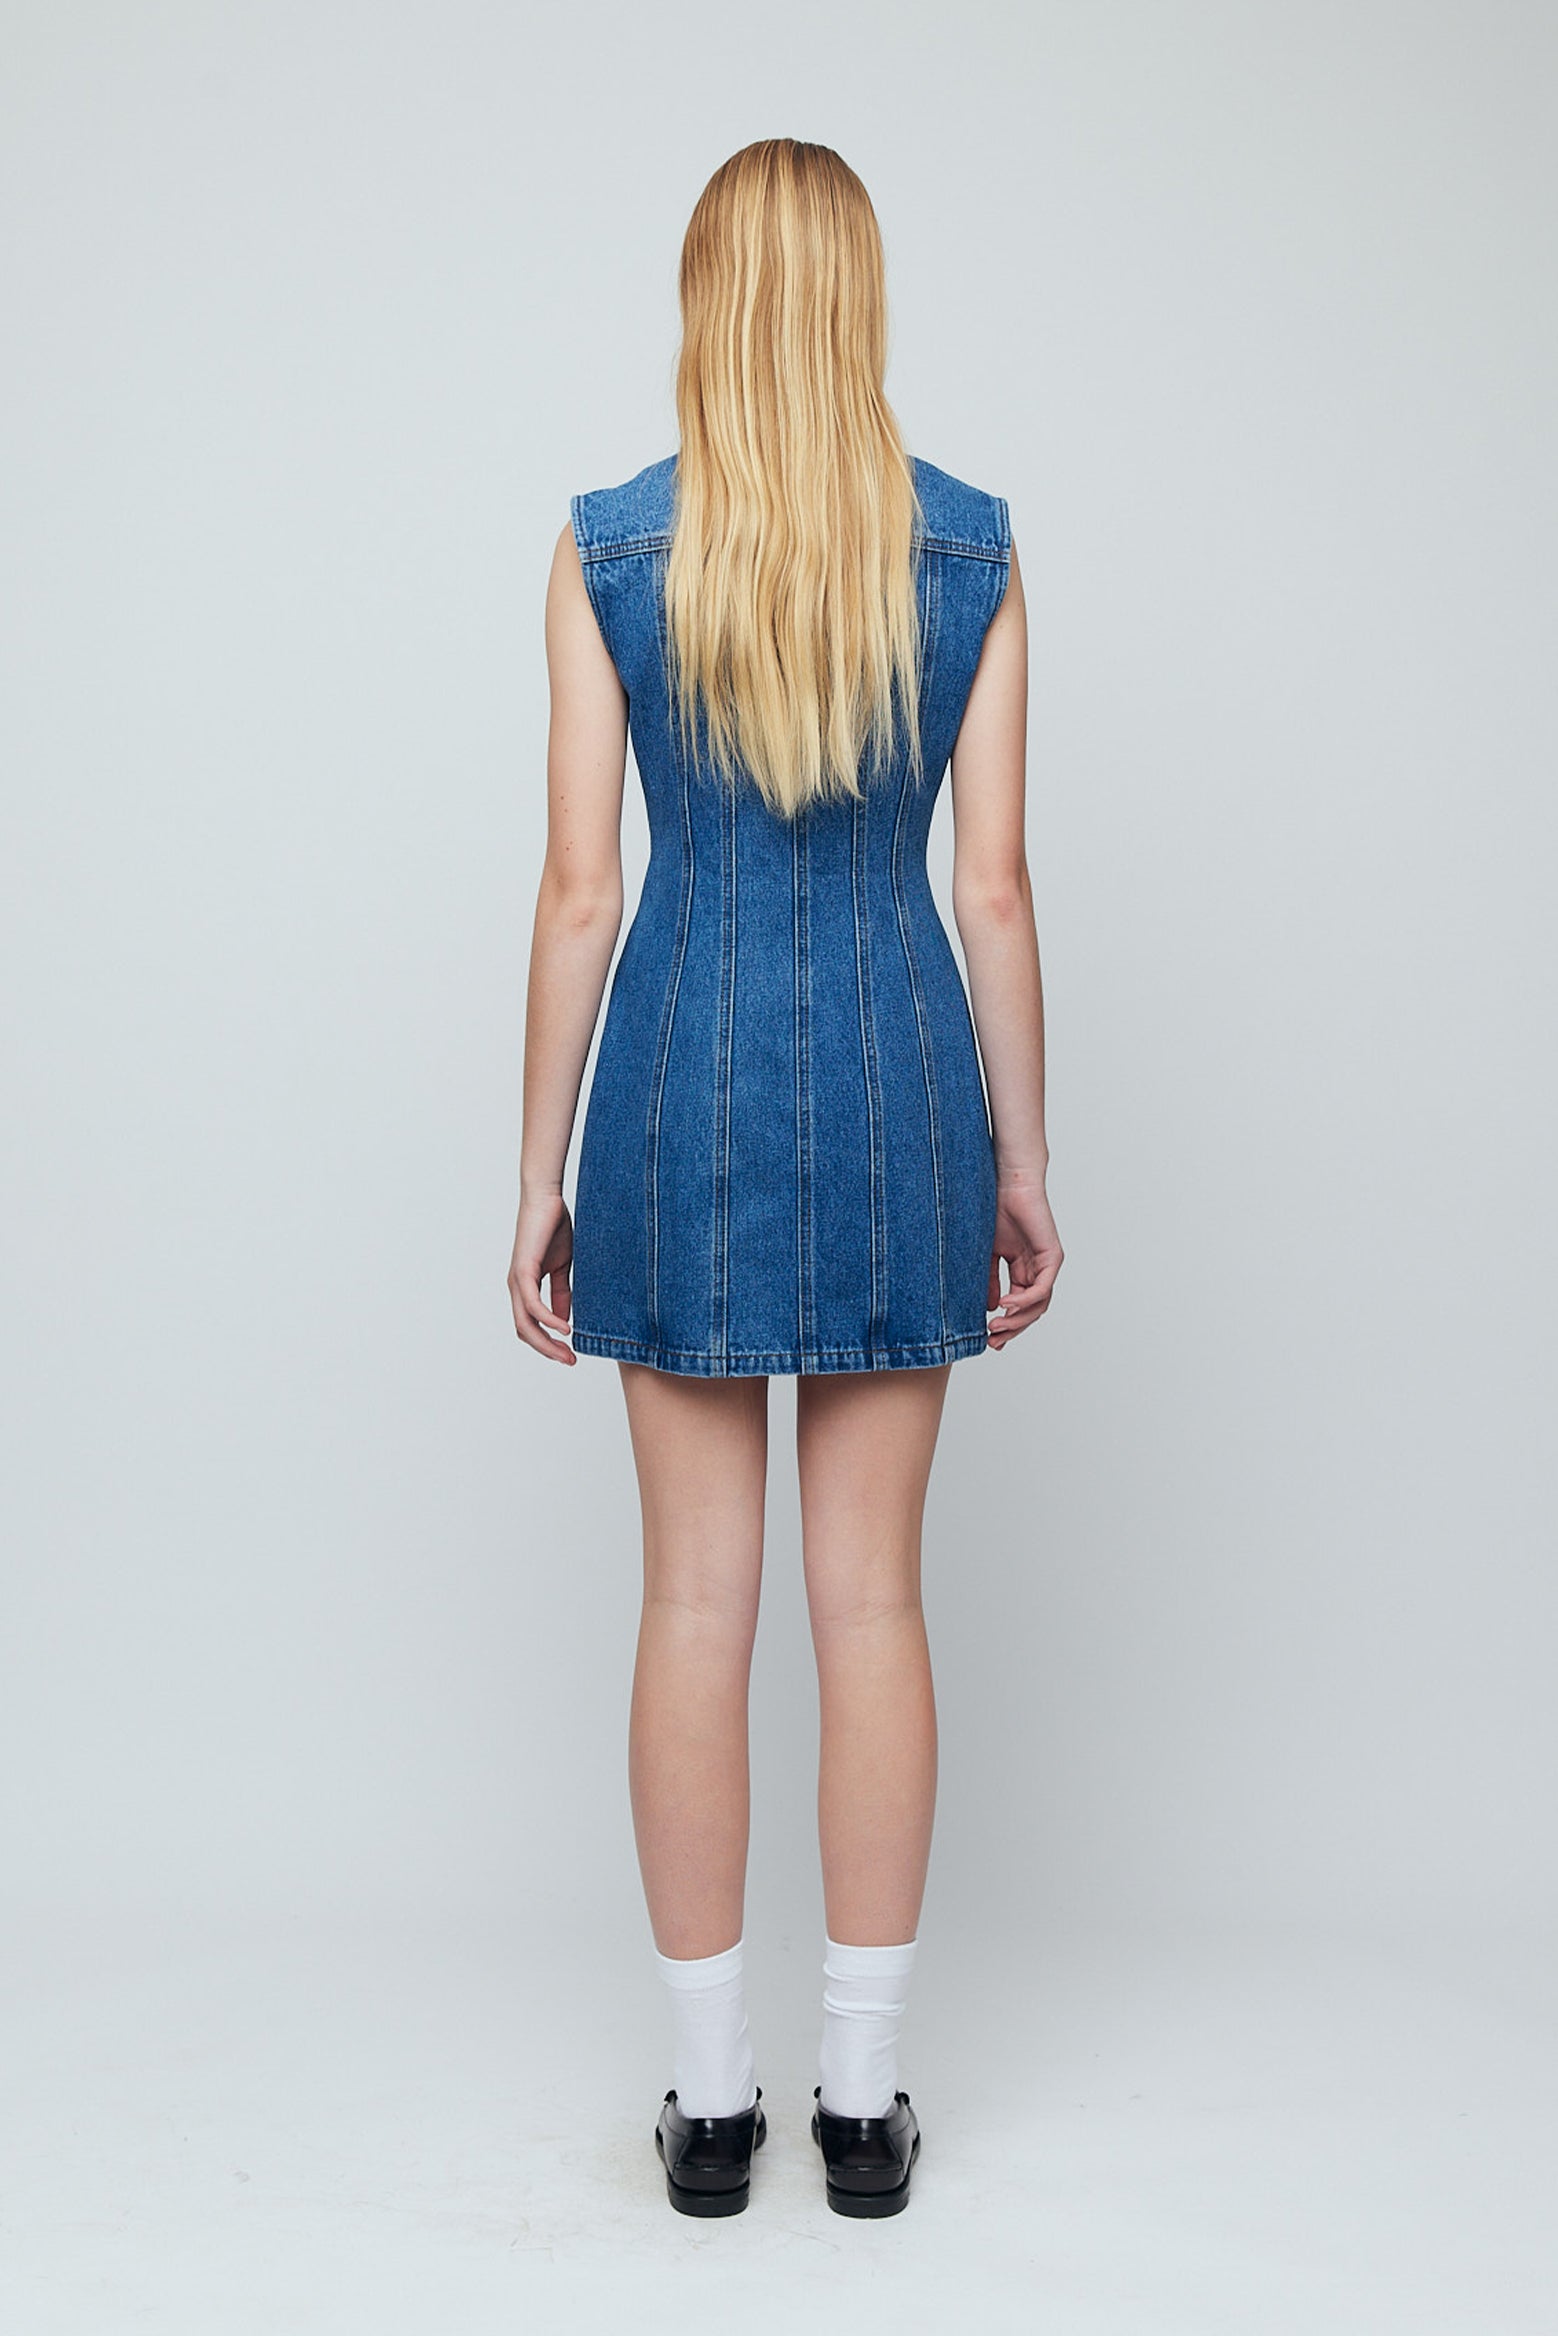 Wynn Hamlyn Denim Panel Sleeveless MIini Dress available at The New Trend Australia.